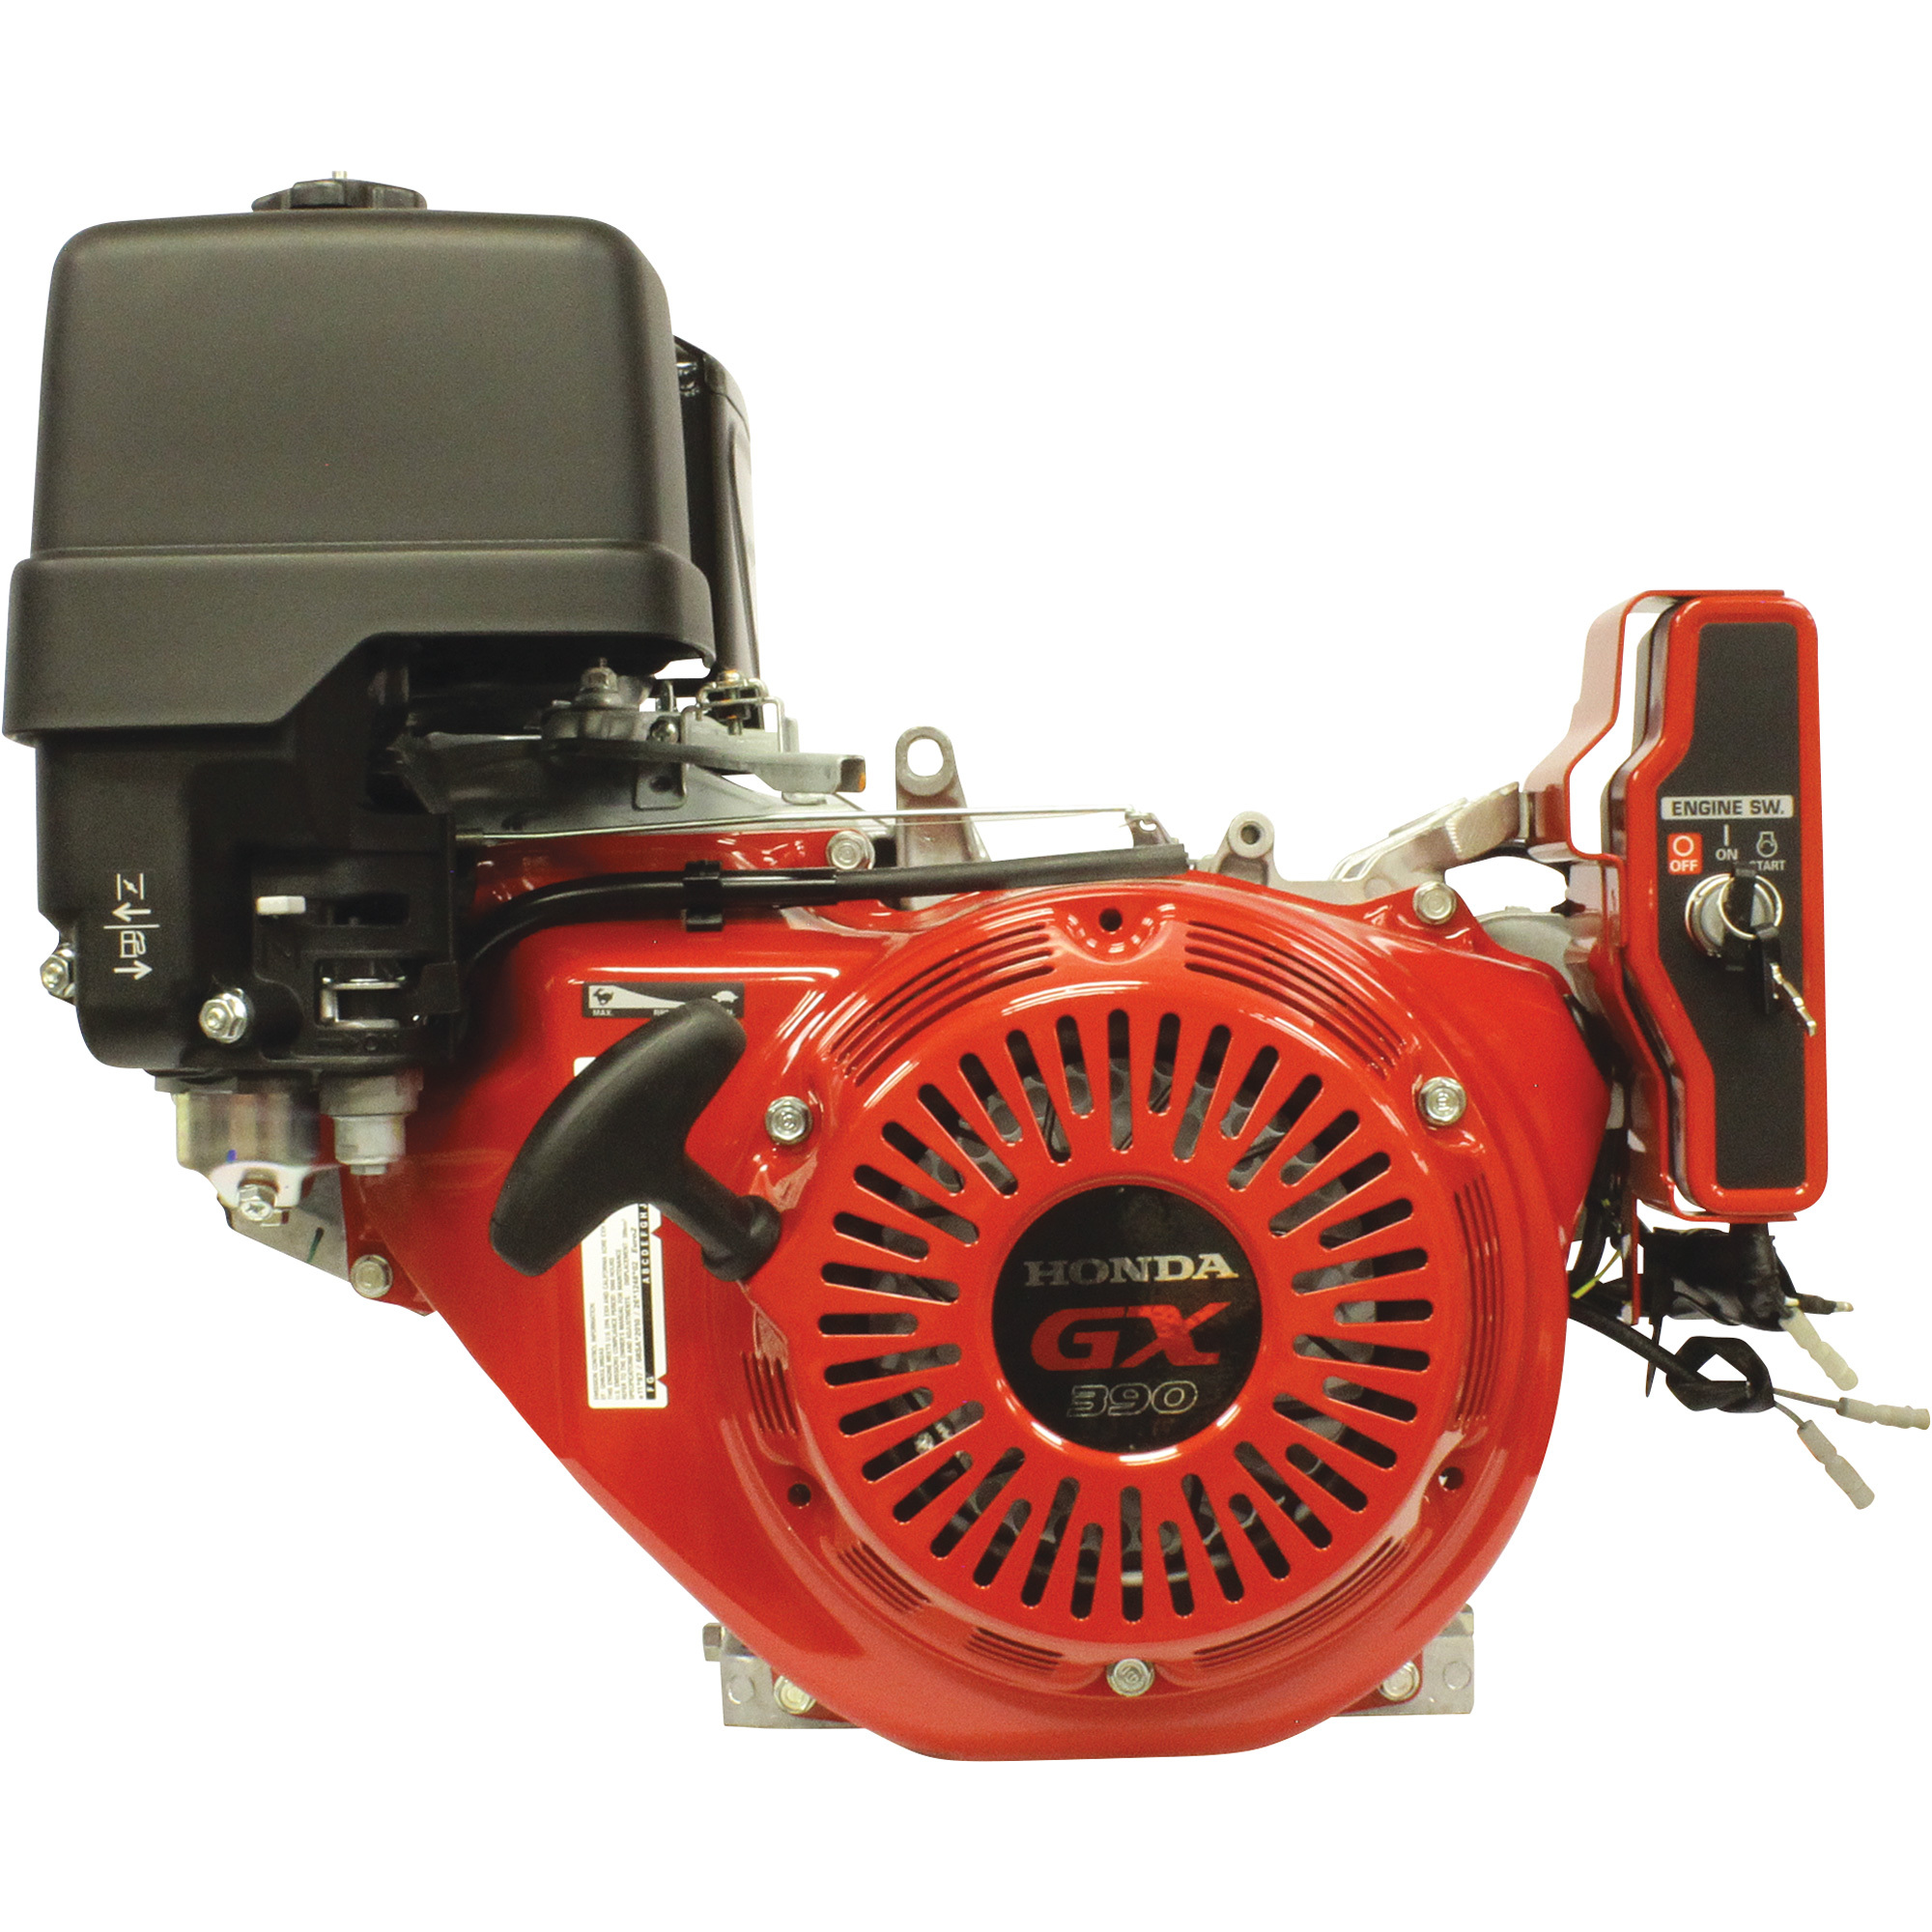 Honda Horizontal OHV Engine with Electric Start â 389cc, GX Series, 1Inch x 3 31/64Inch Shaft, Model GX390RT2QNGN